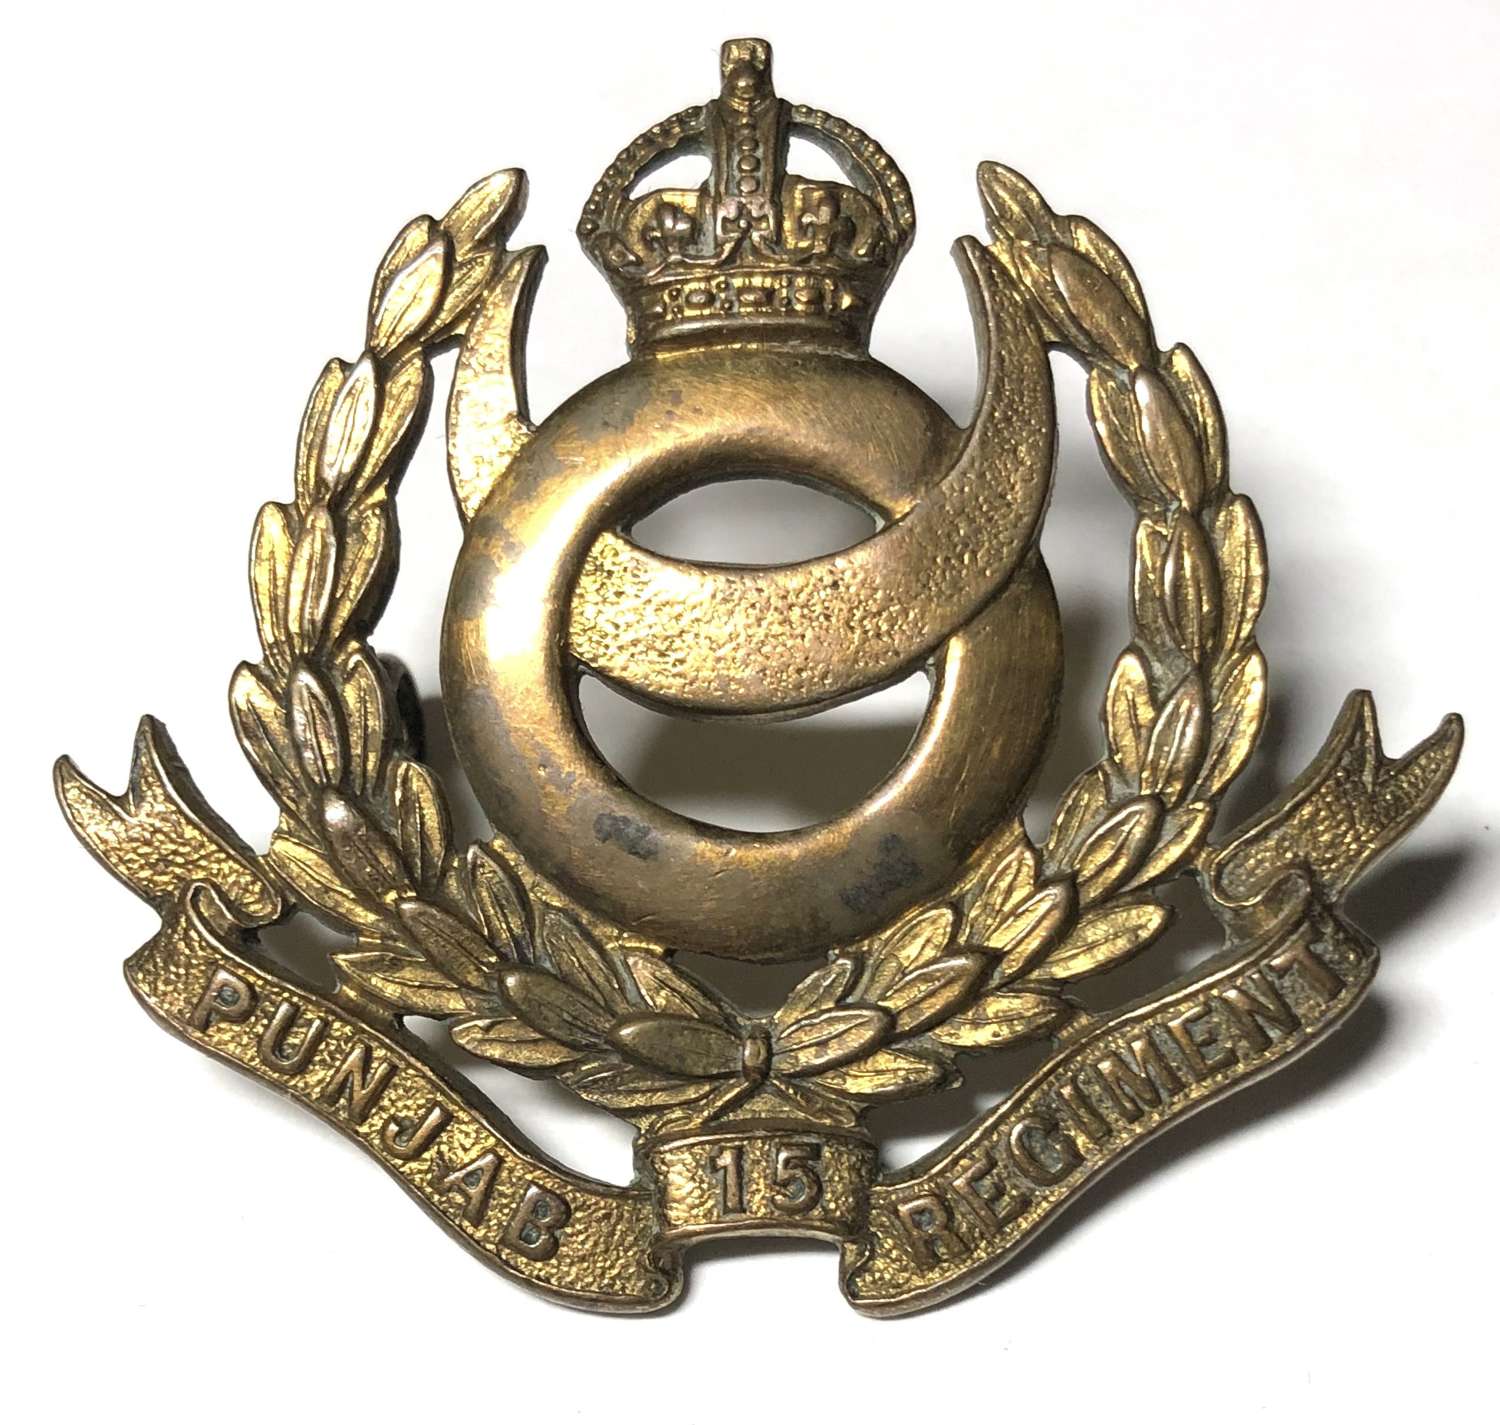 15th Punjab Regiment post 1922 Officer’s cap badge by Gaunt, London